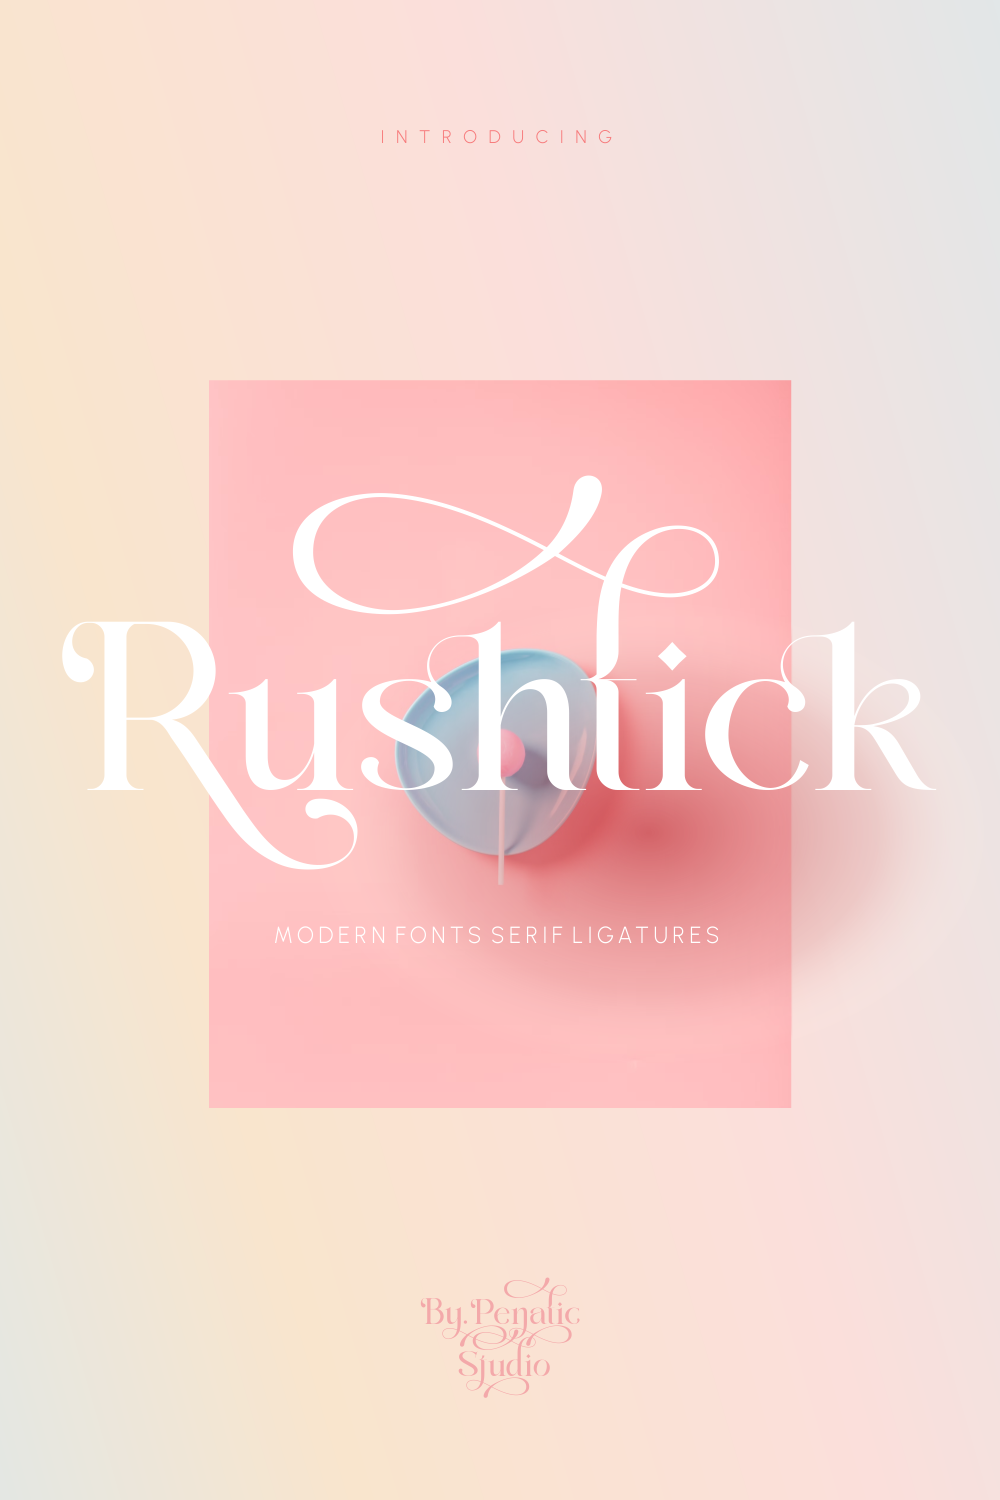 Rushtick _ Modern serif ligature font pinterest preview image.